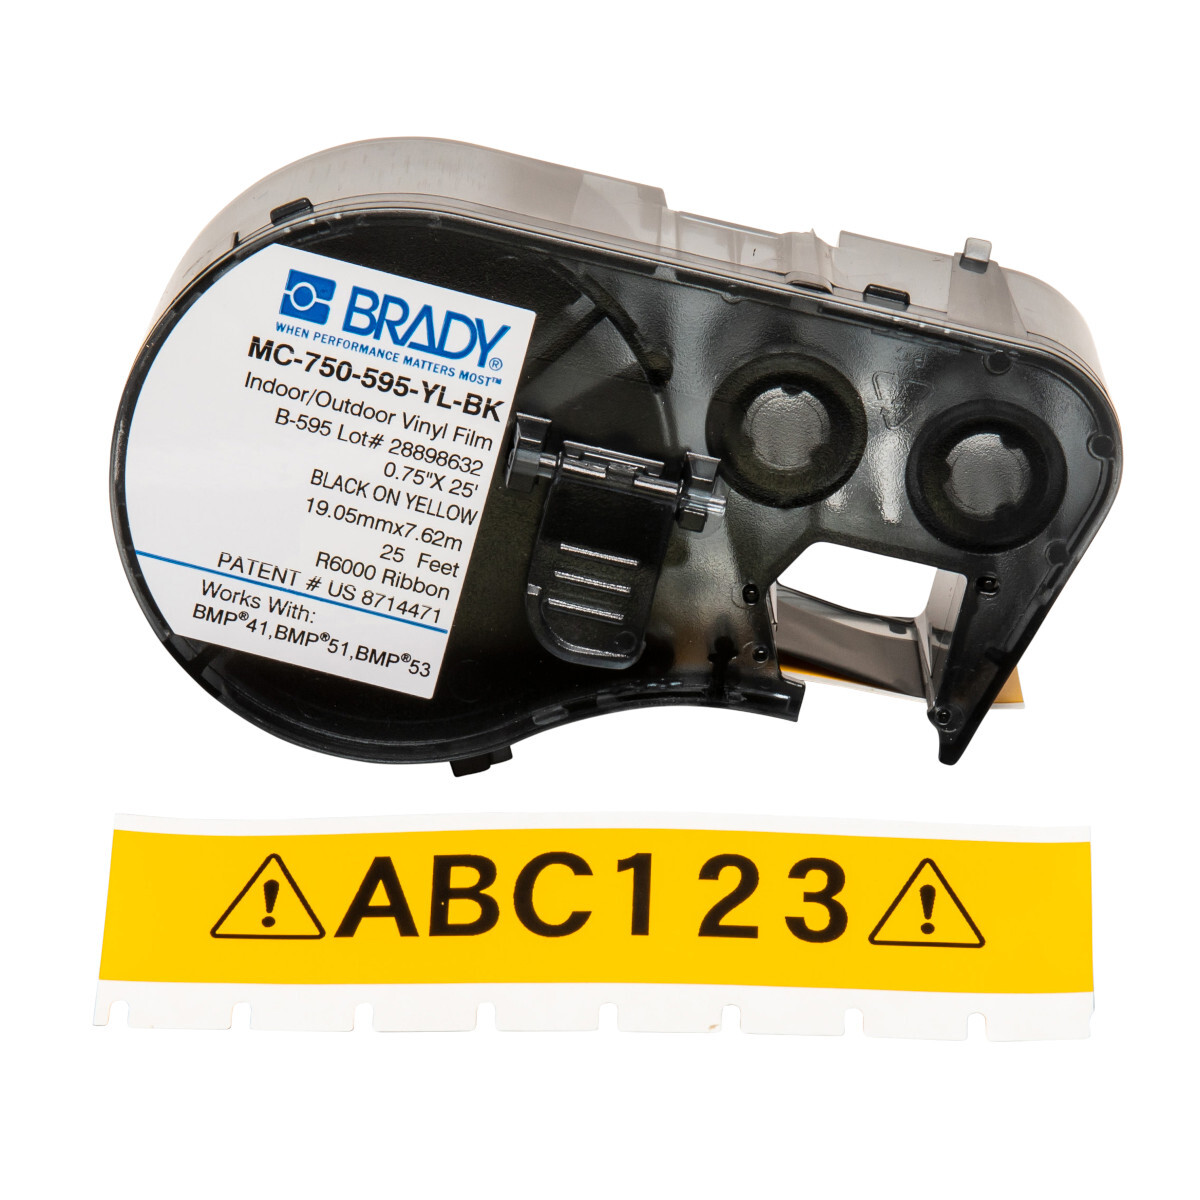 Brady MC-750-595-YL-BK